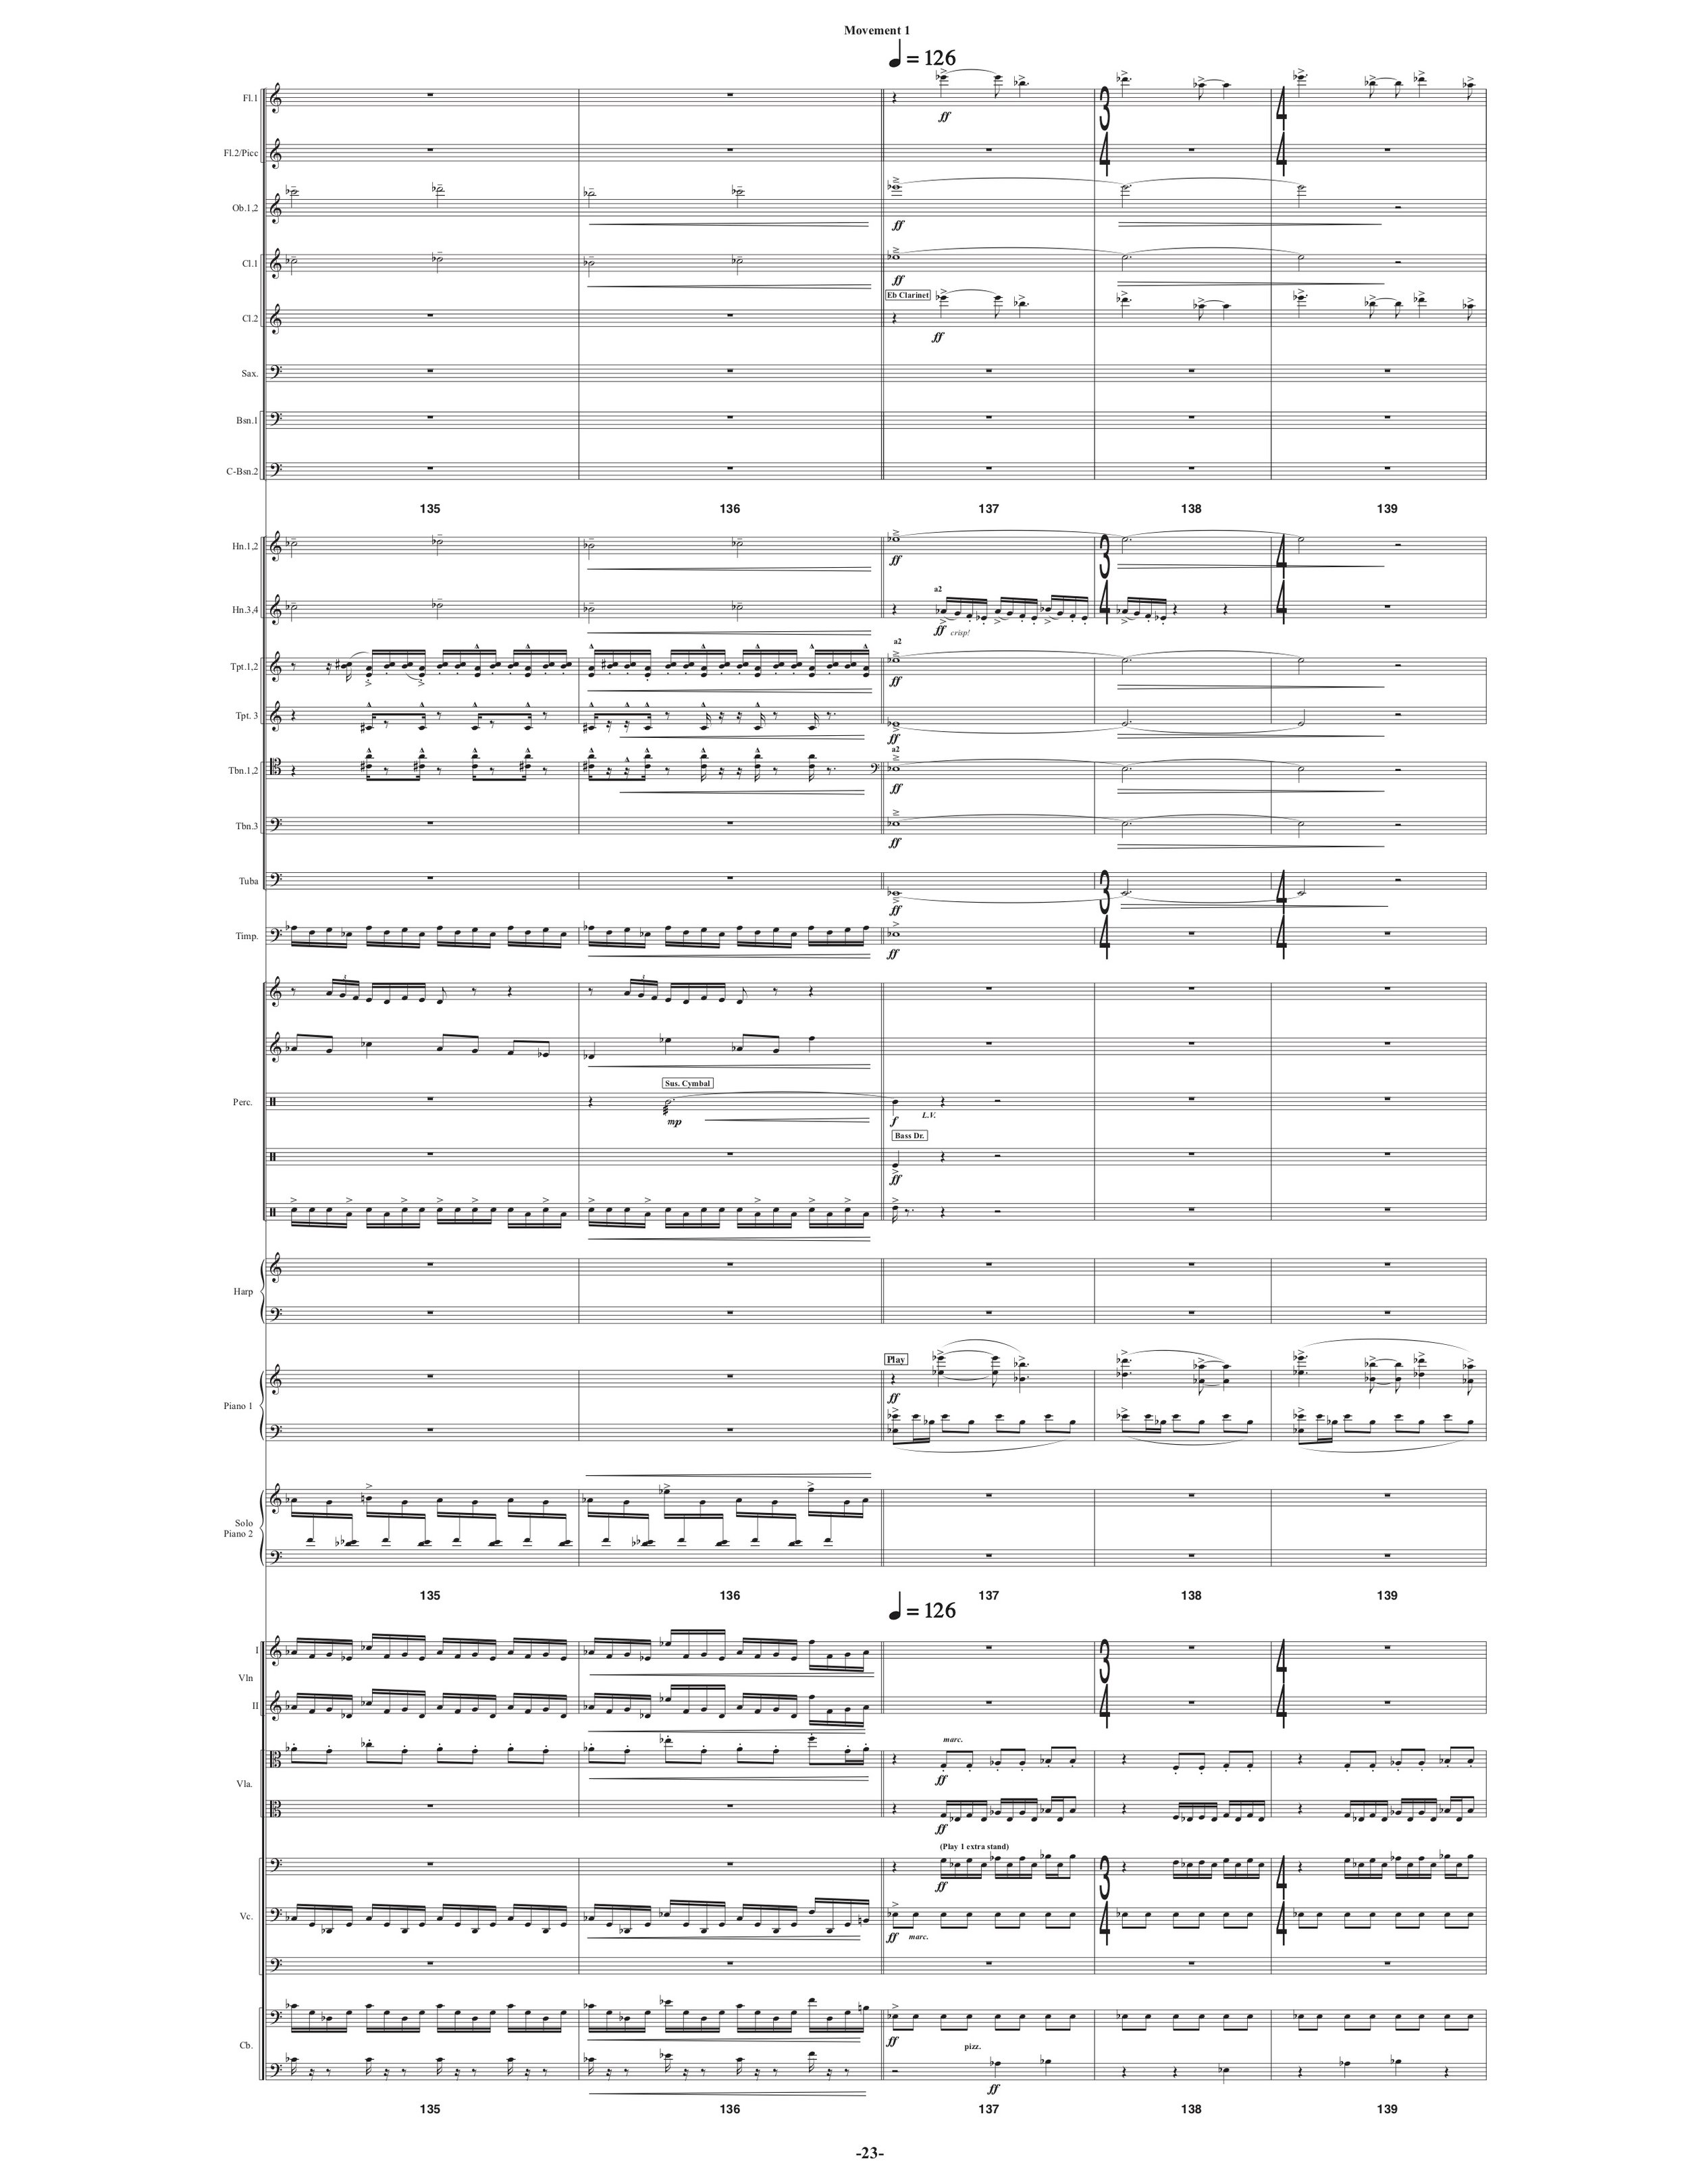 Symphony_Orch & 2 Pianos p28.jpg